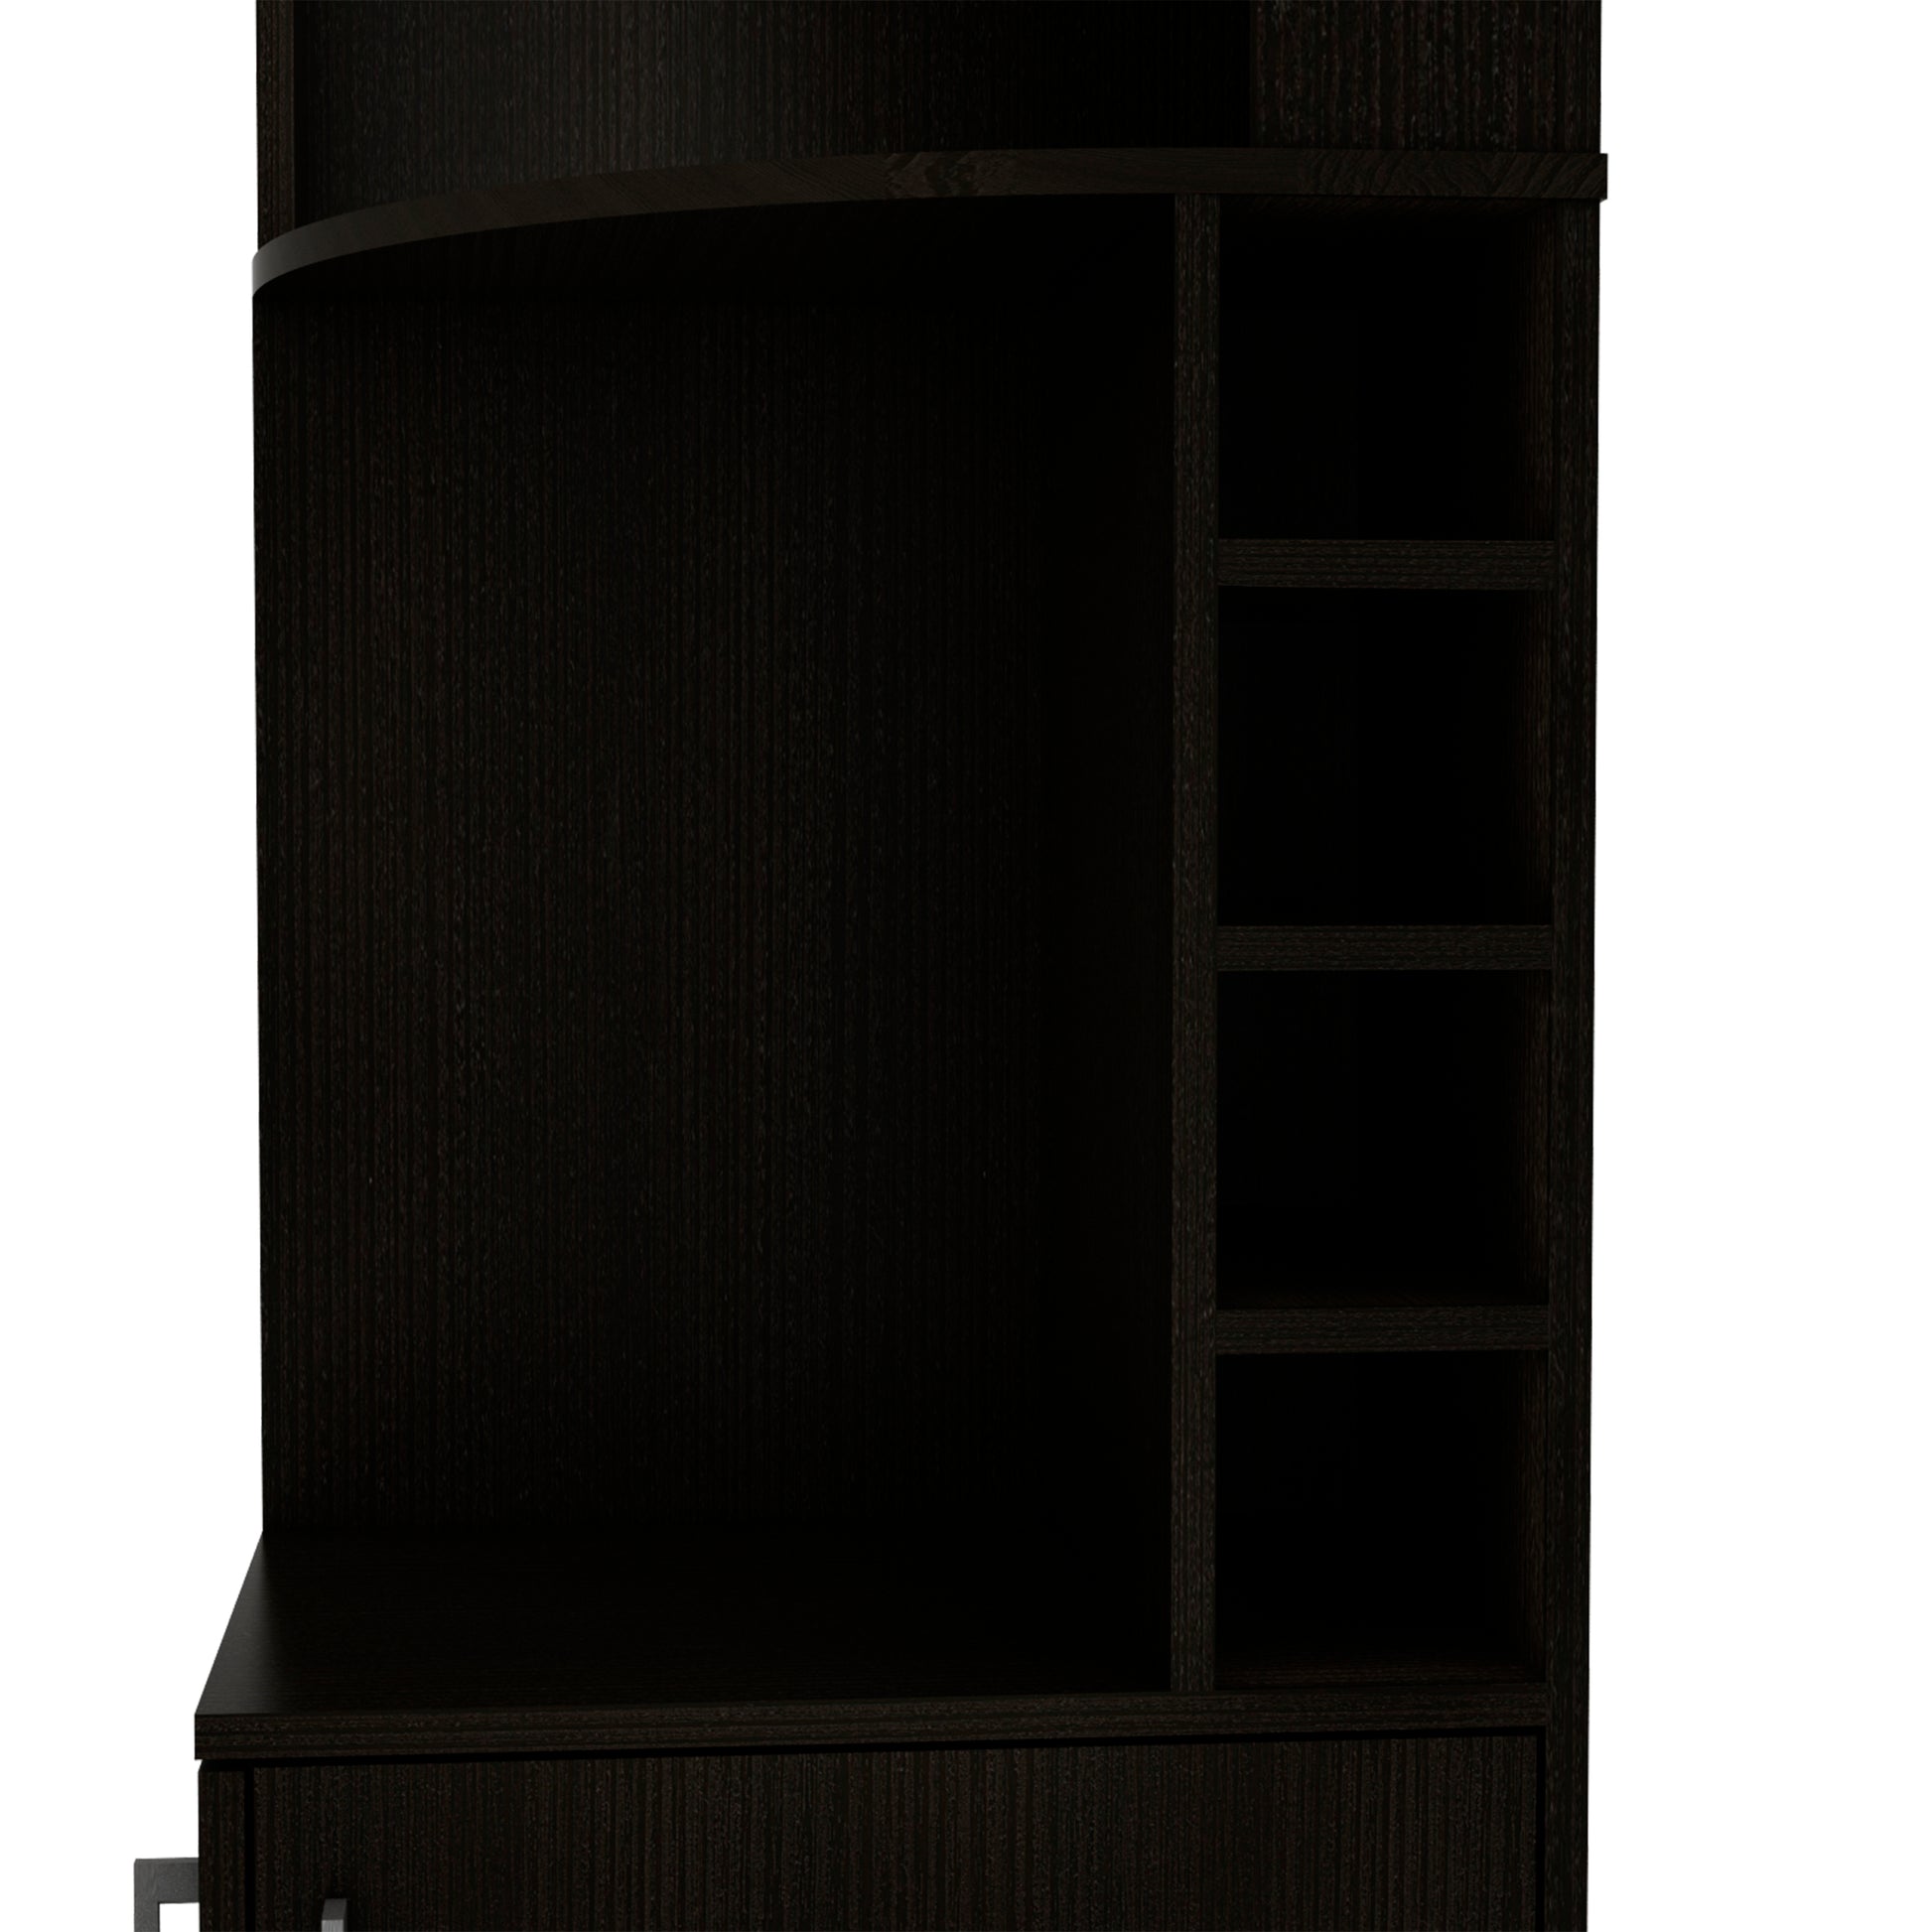 71" H Black Corner Bar Cabinet, With Two Shelves